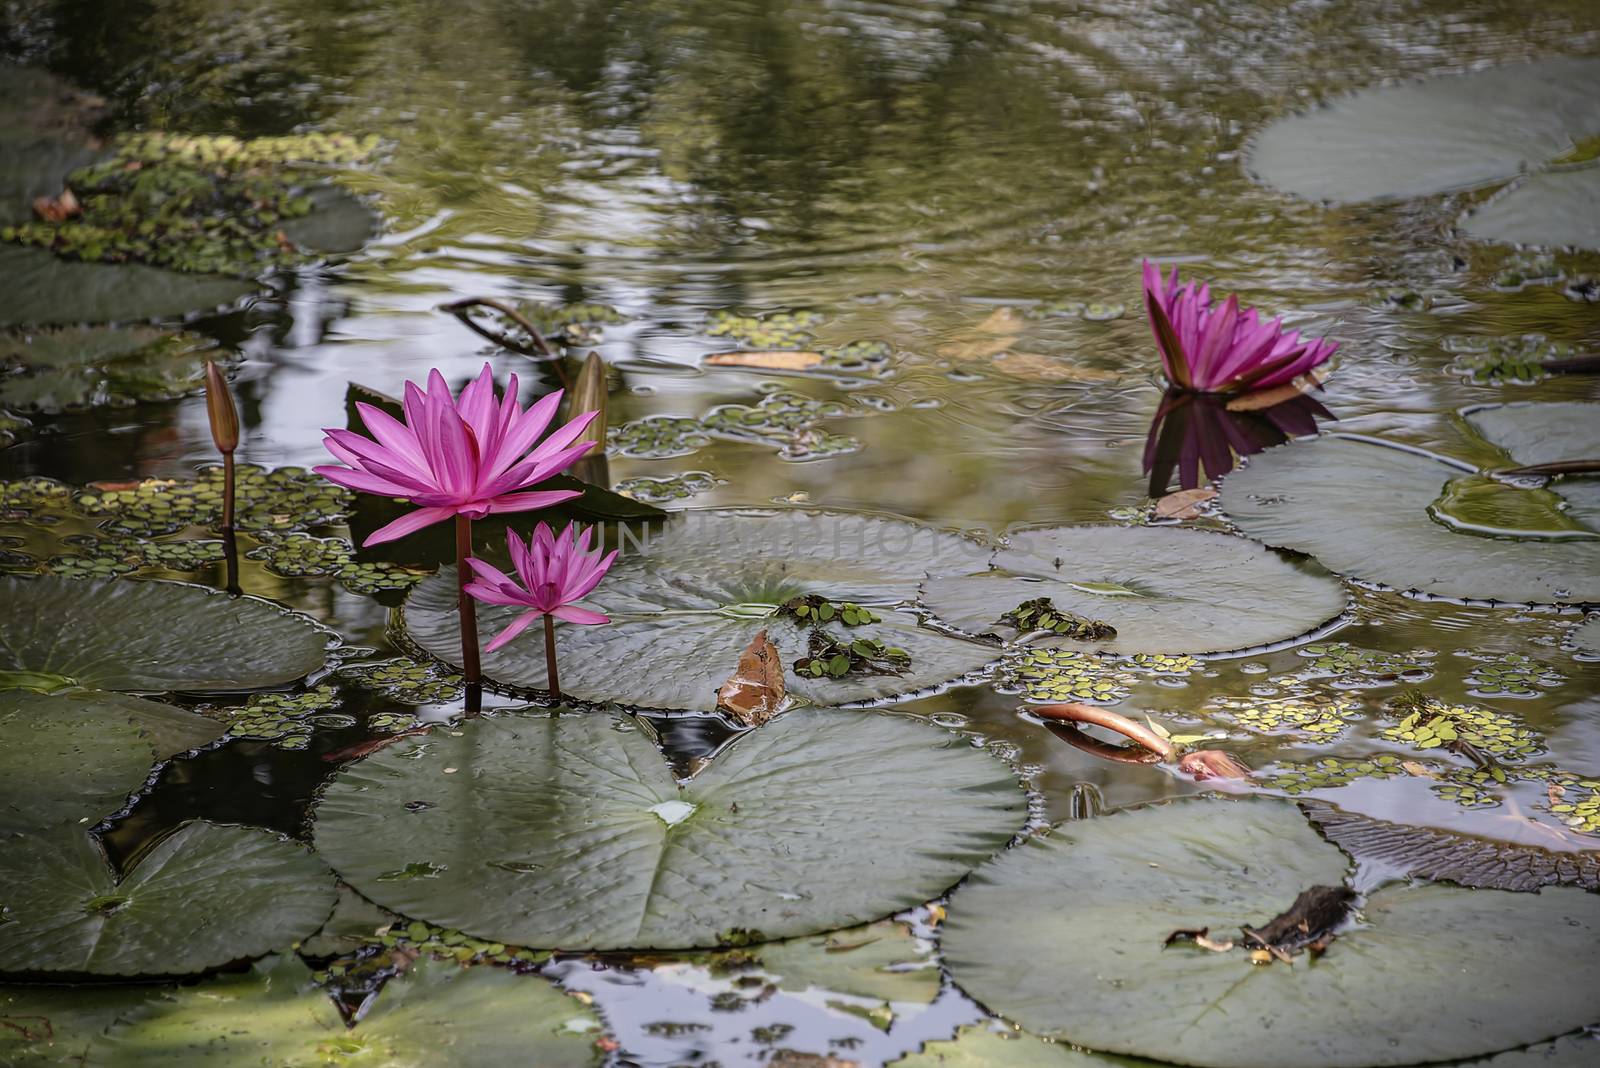 Sir Lanka, Sigyriya: Lotus flower blooming in a reflective pool